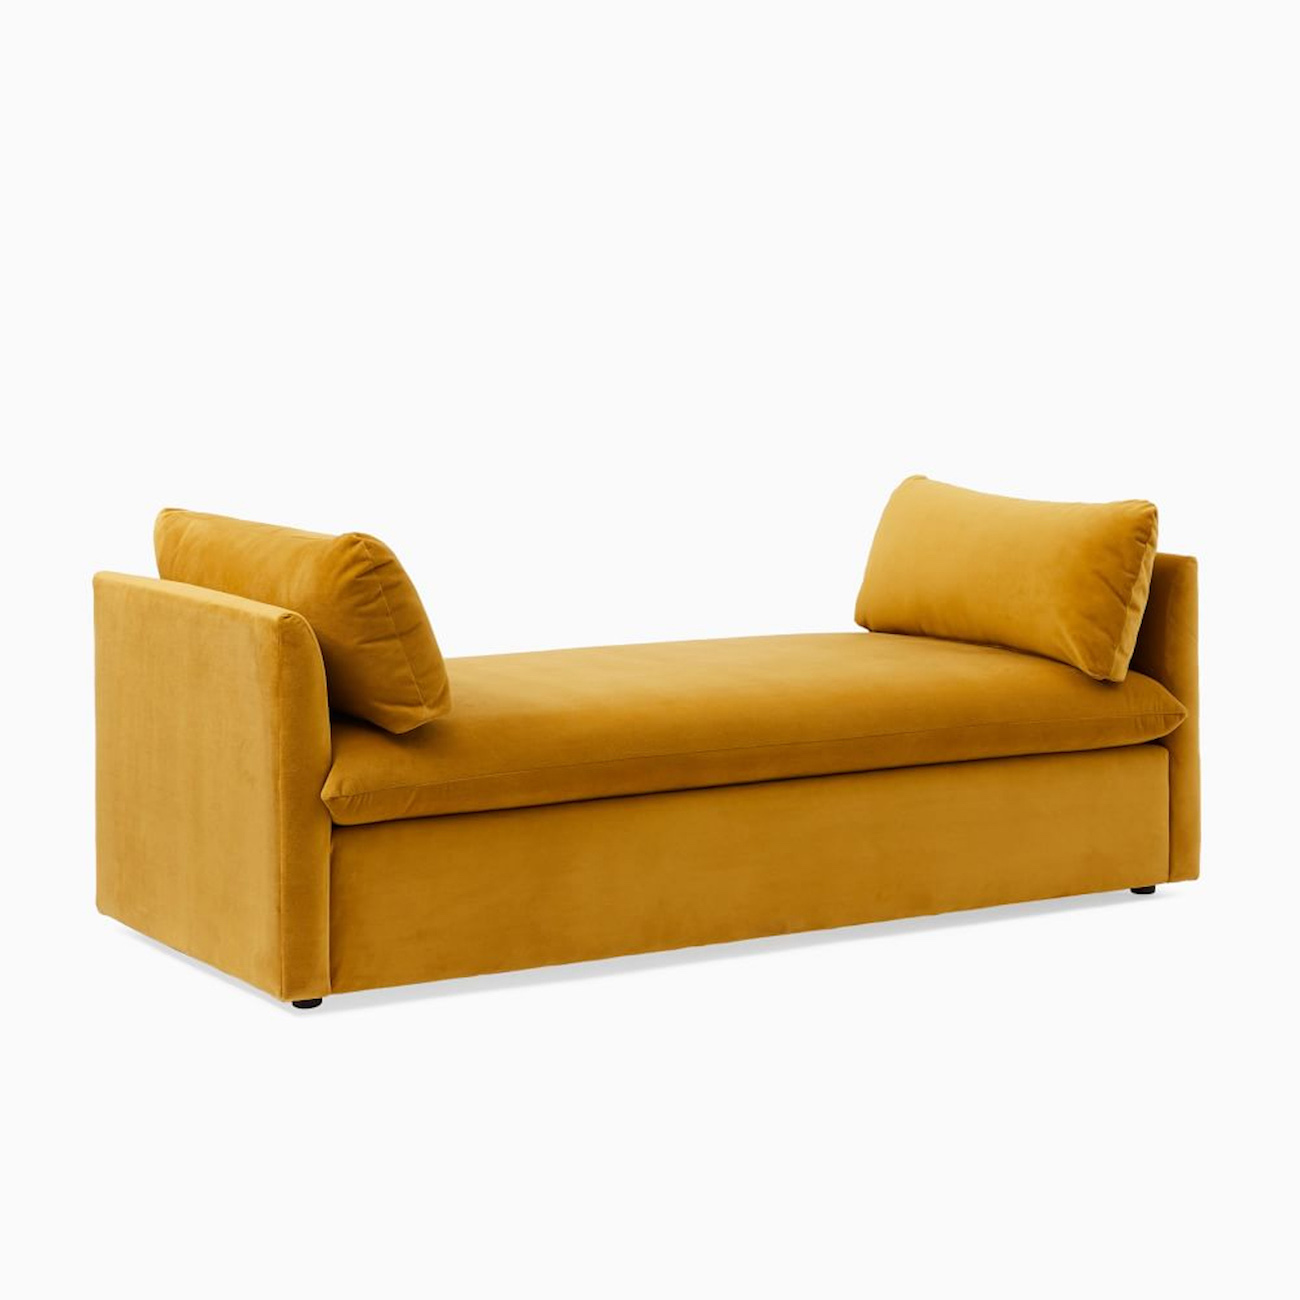 5 Sofa Beds To Hone Your Small E